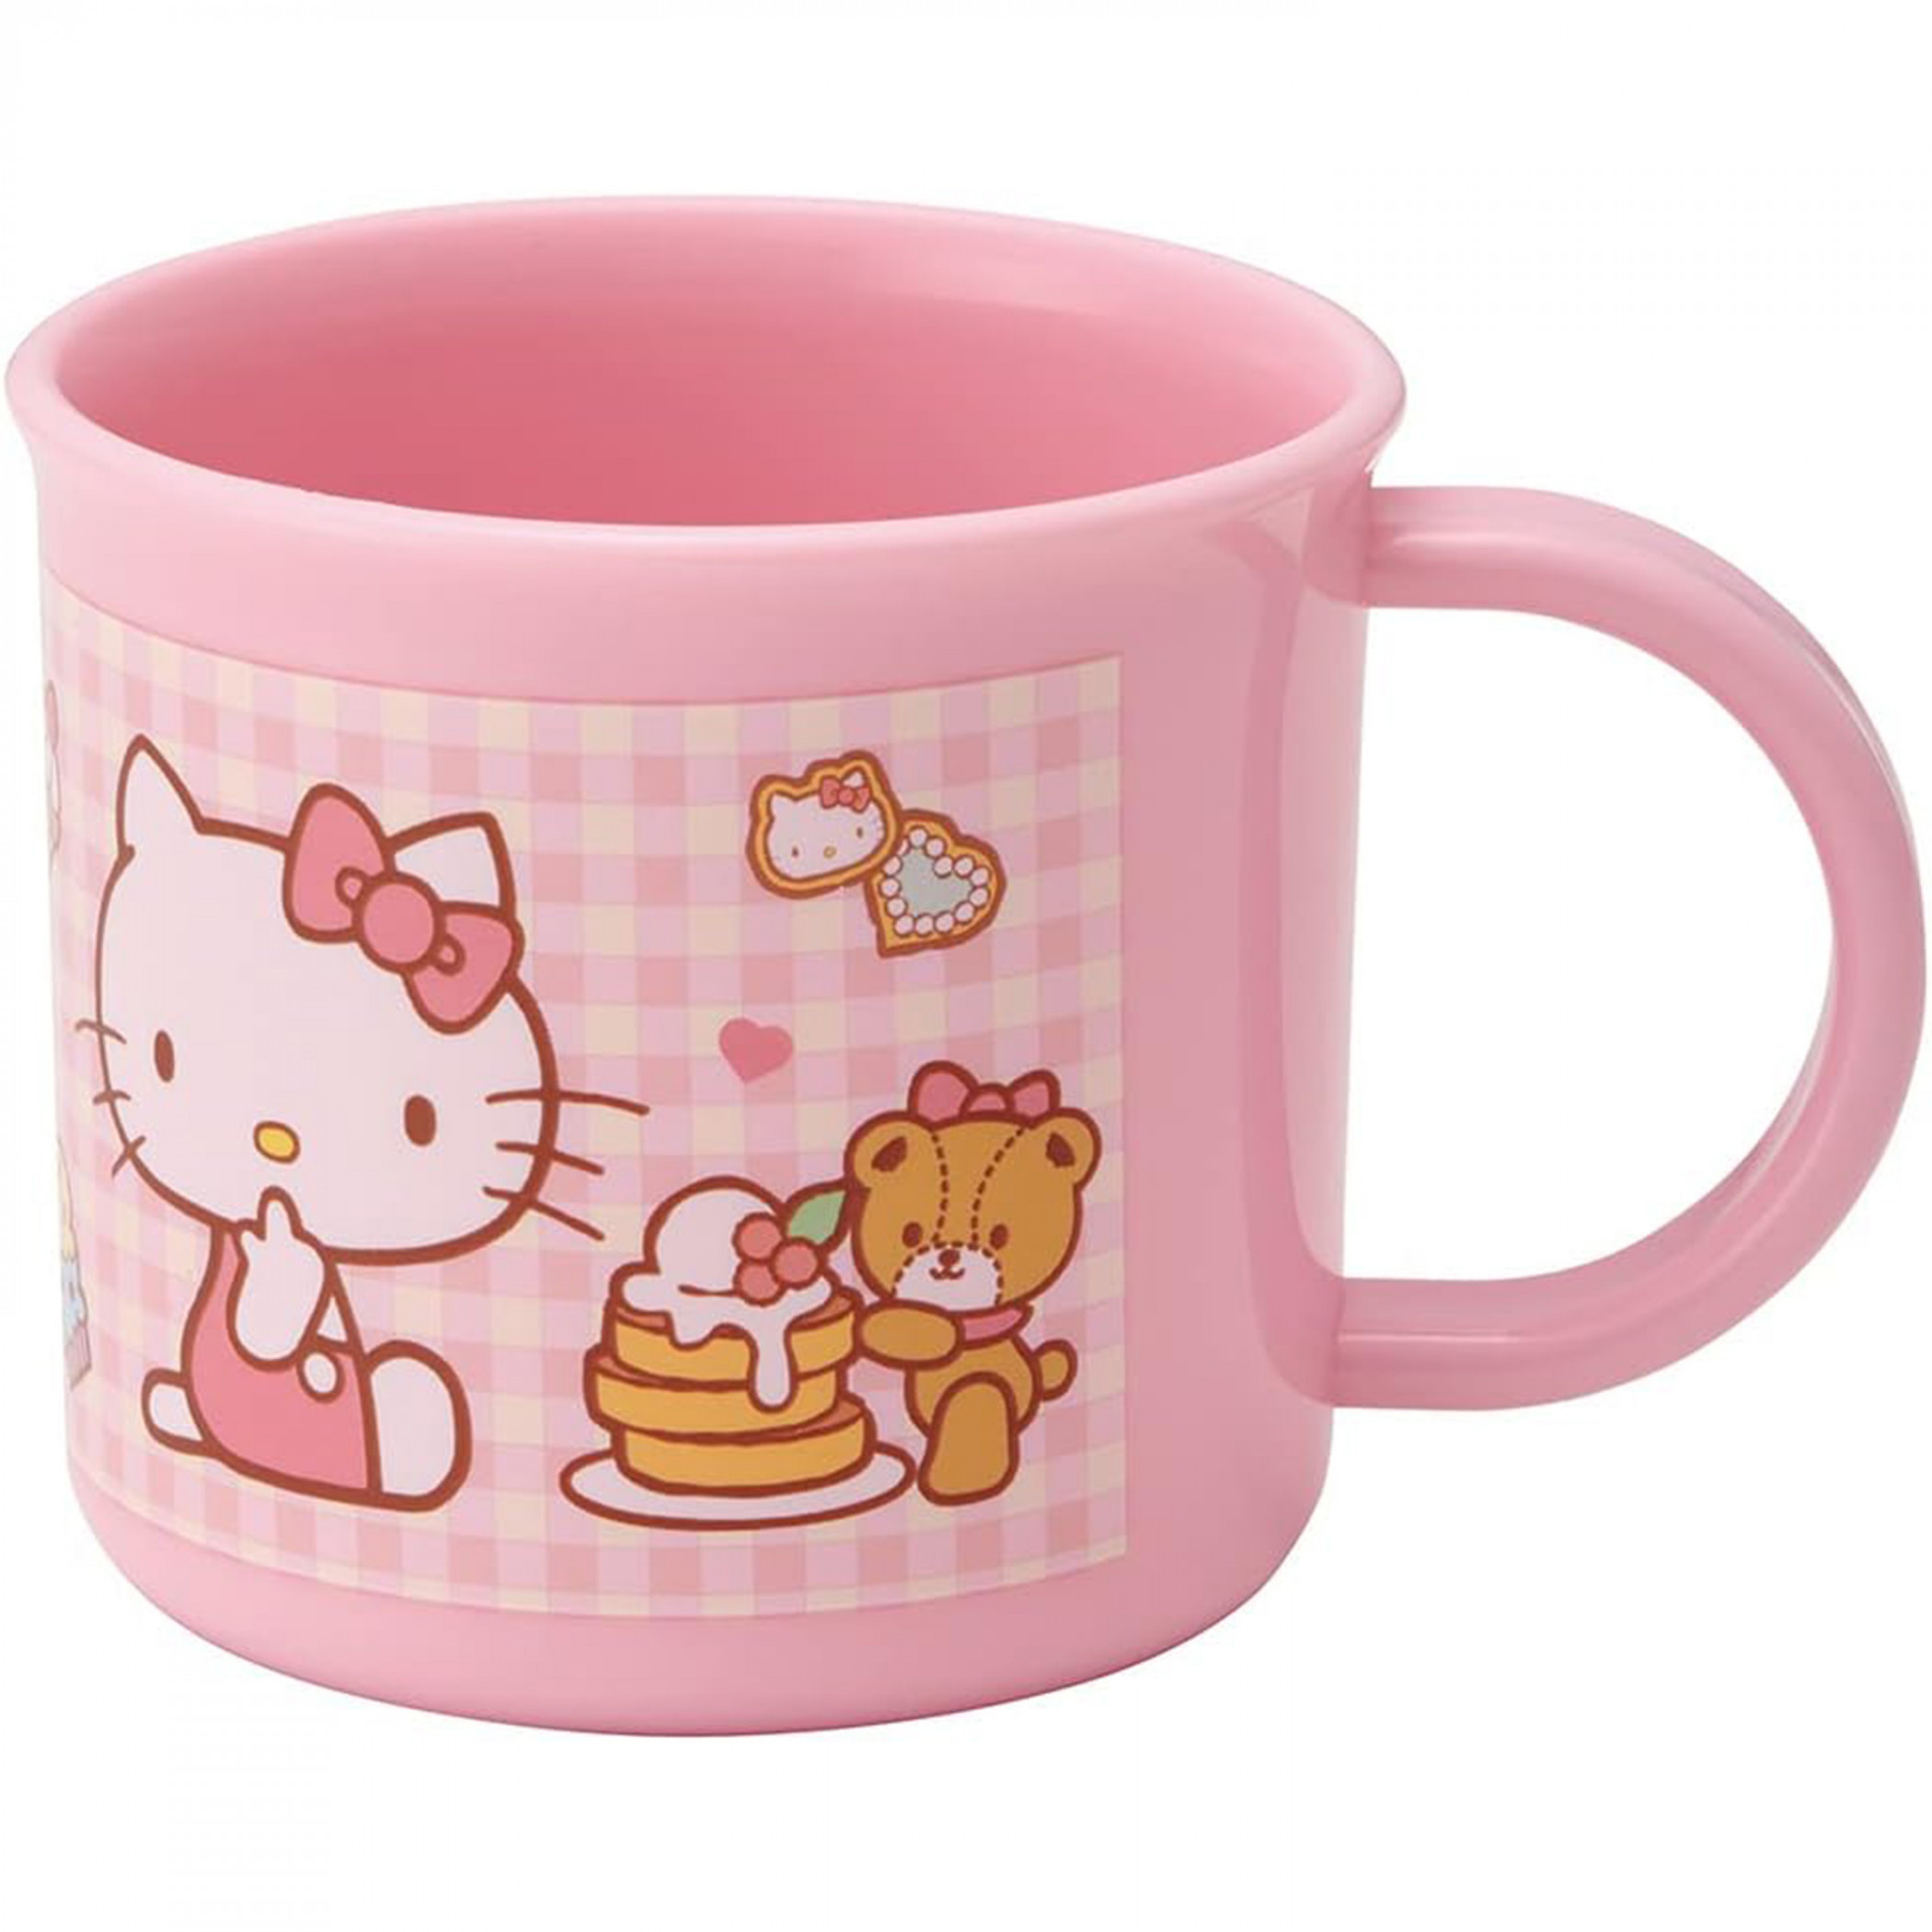 Hello Kitty Let's Have Some Teatime Fun 6.7oz Mug